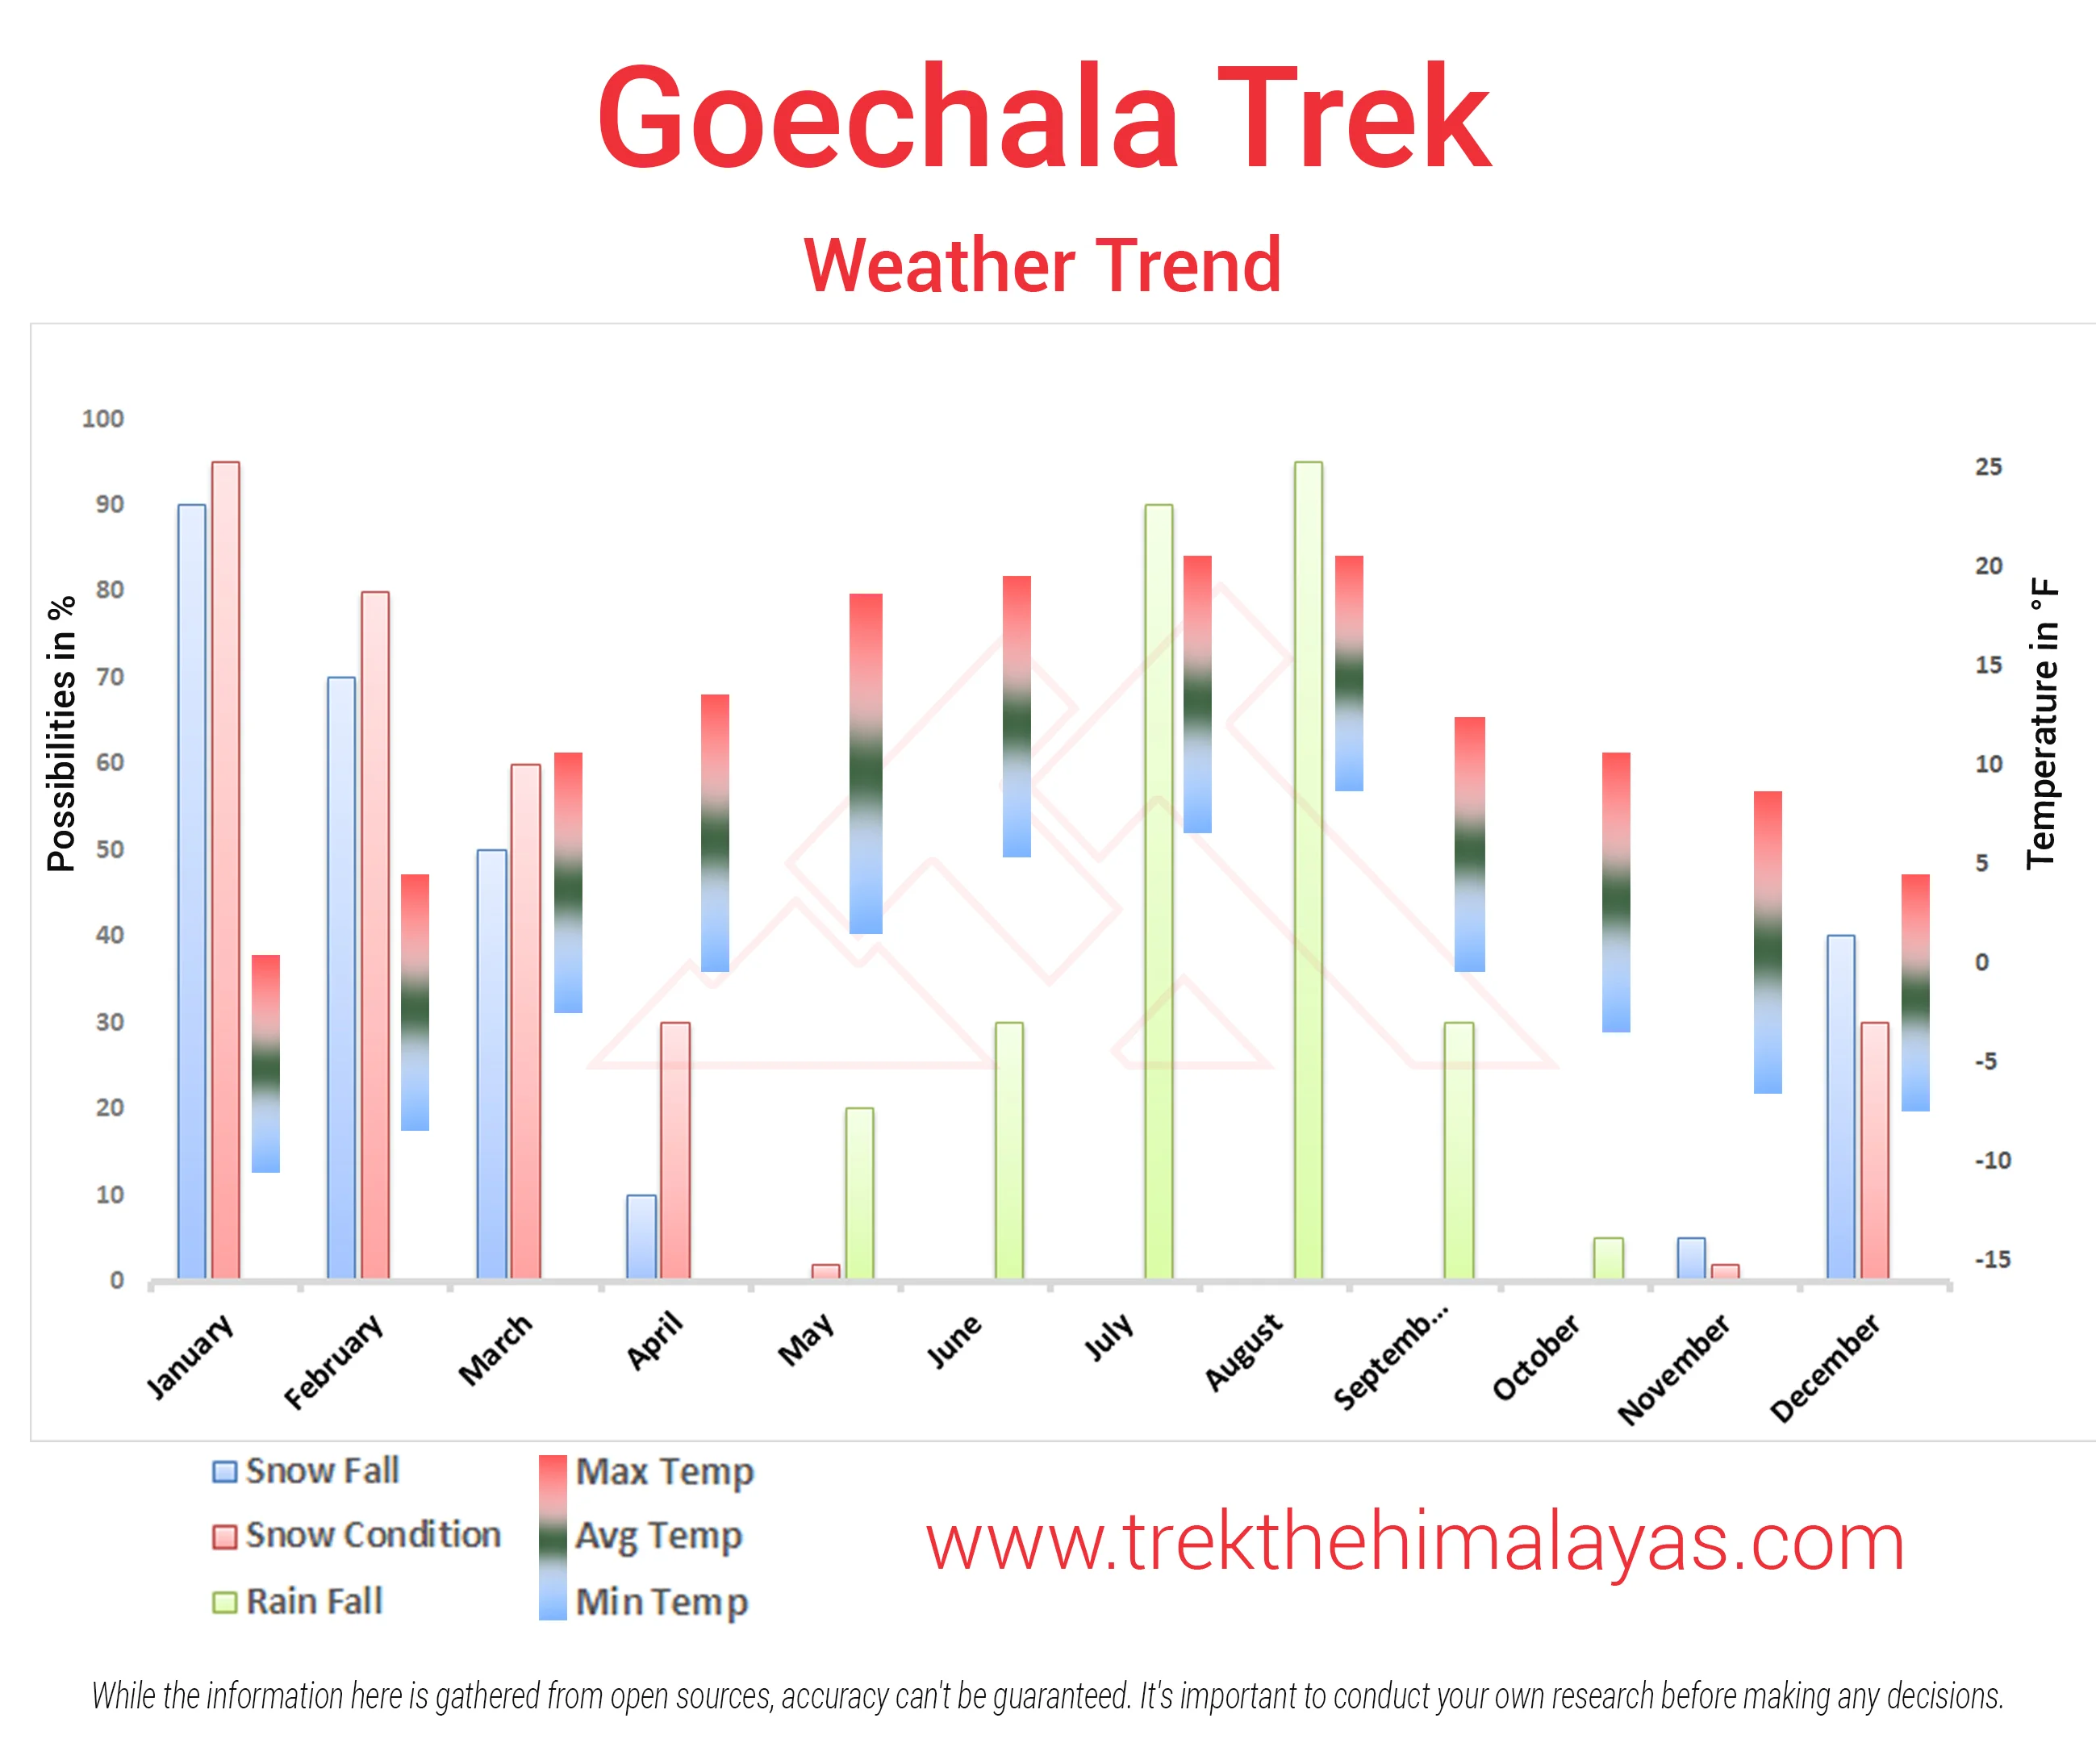 Goechala Trek Maps